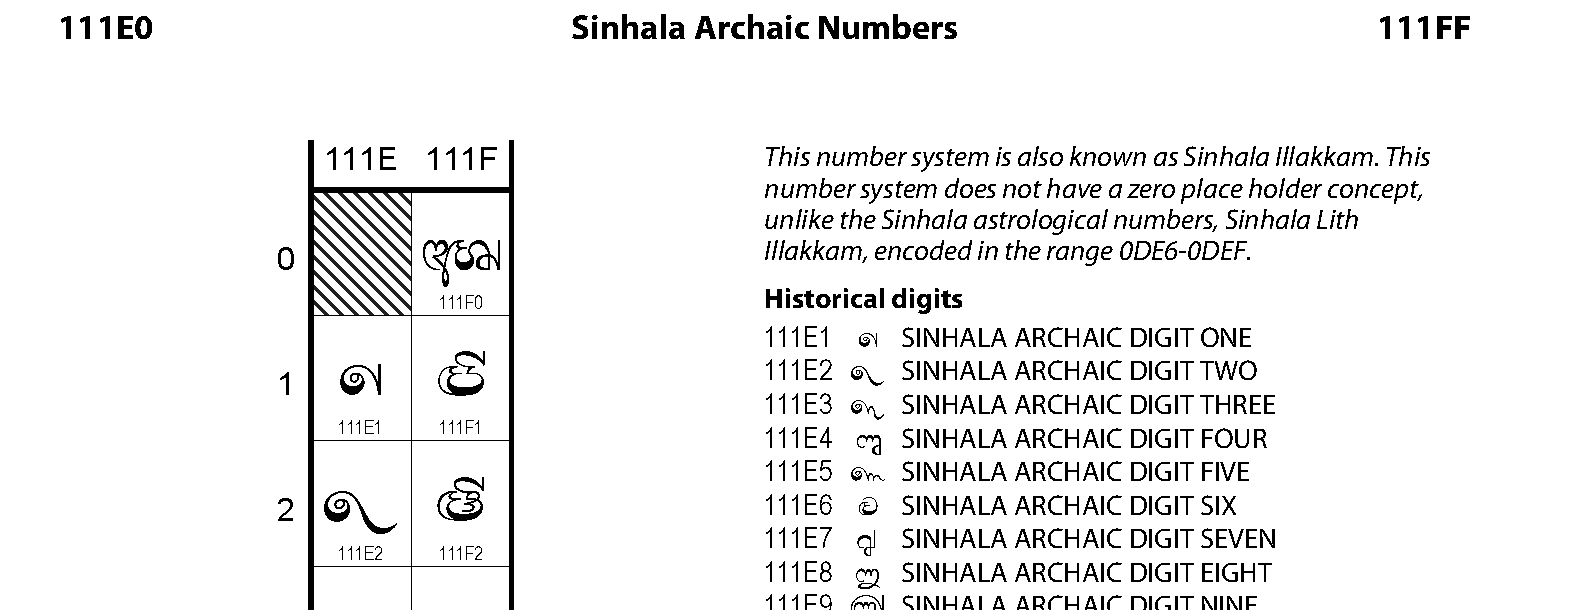 Unicode - Sinhala Archaic Numbers